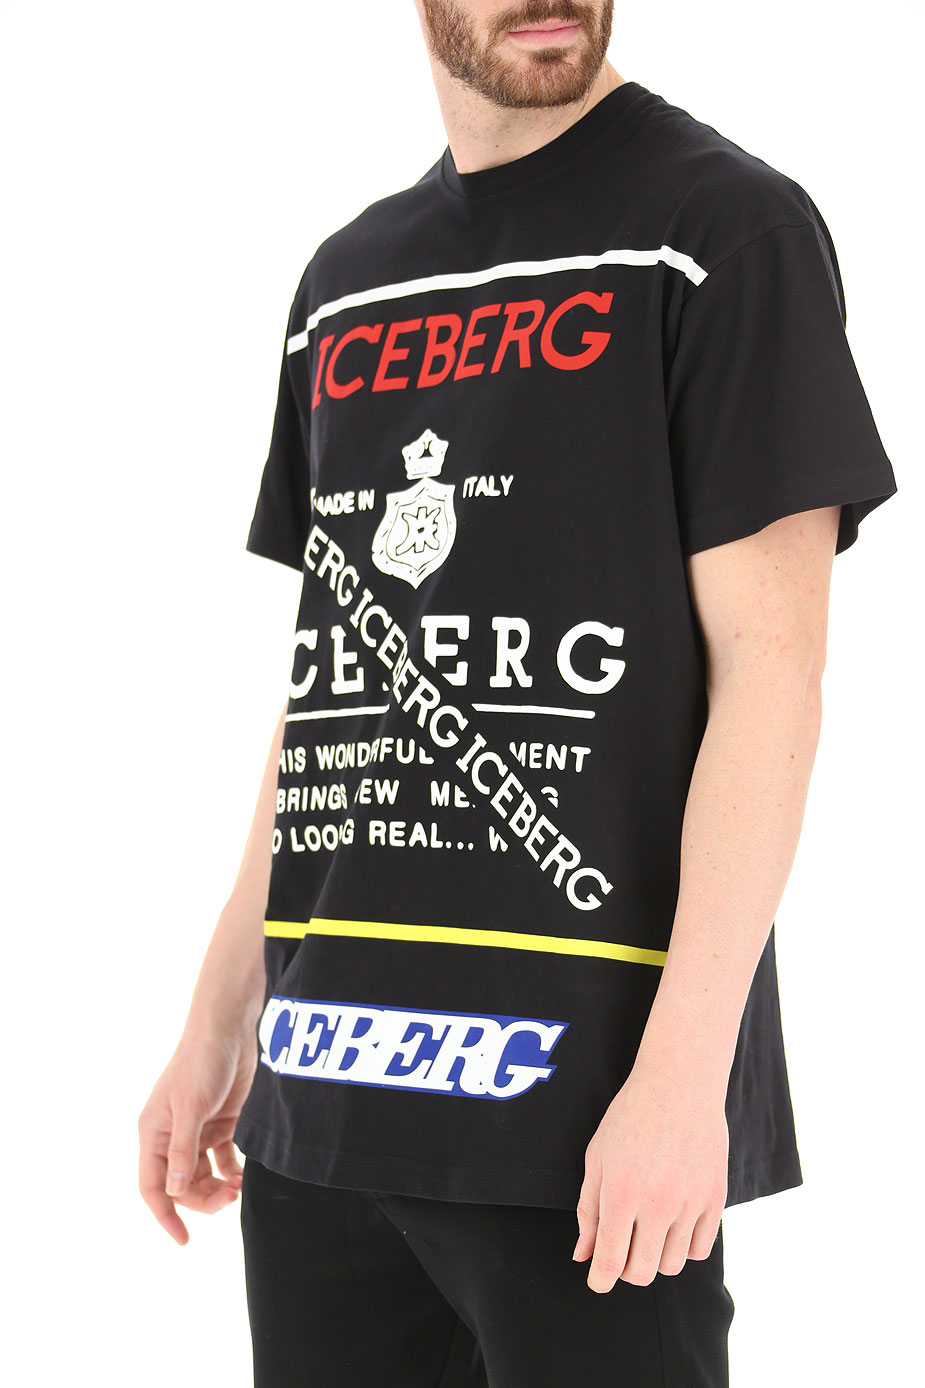 iceberg clothing defective